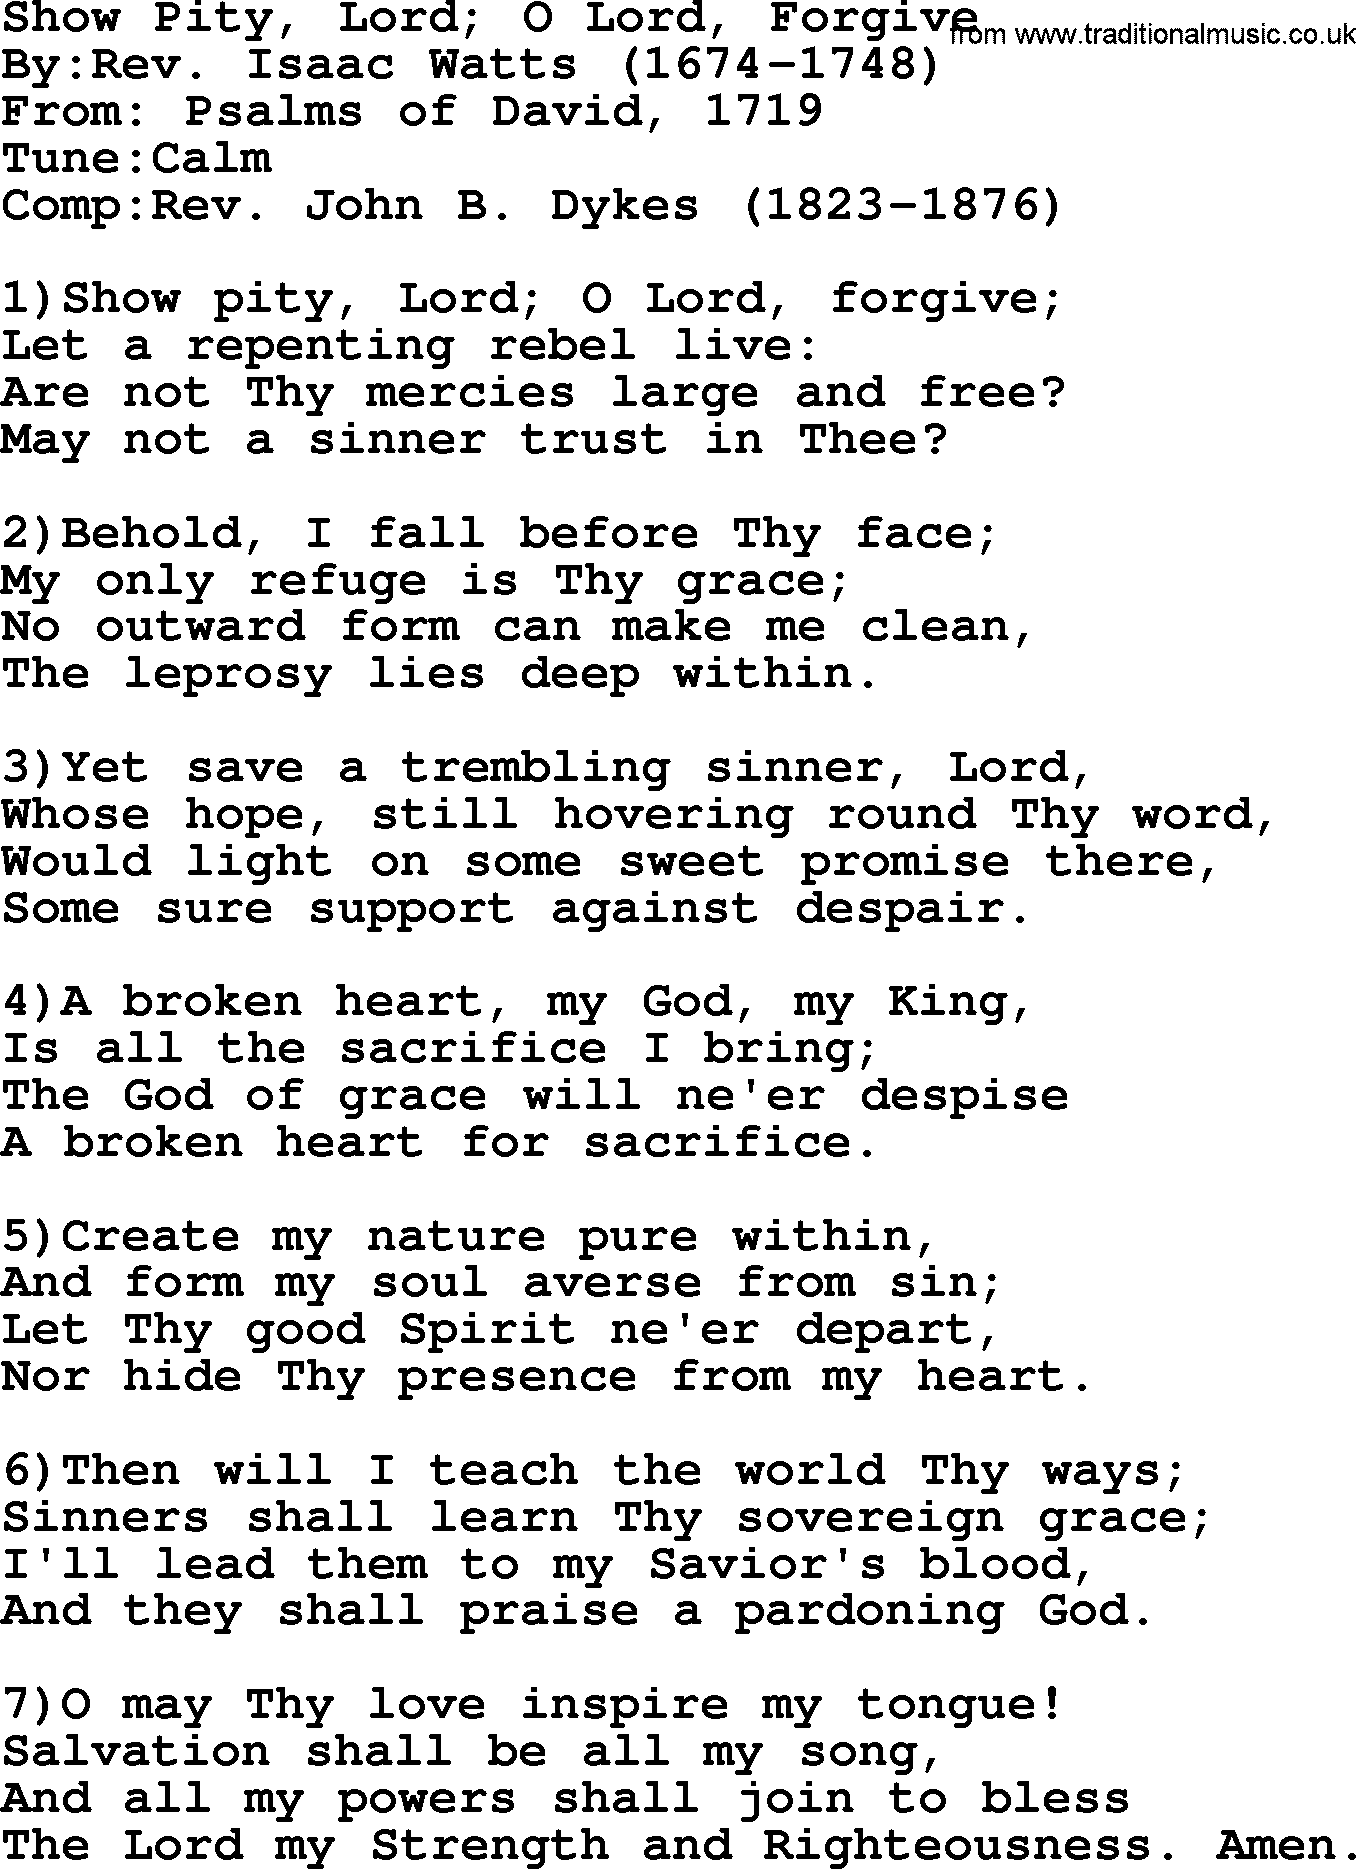 Methodist Hymn: Show Pity, Lord; O Lord, Forgive, lyrics